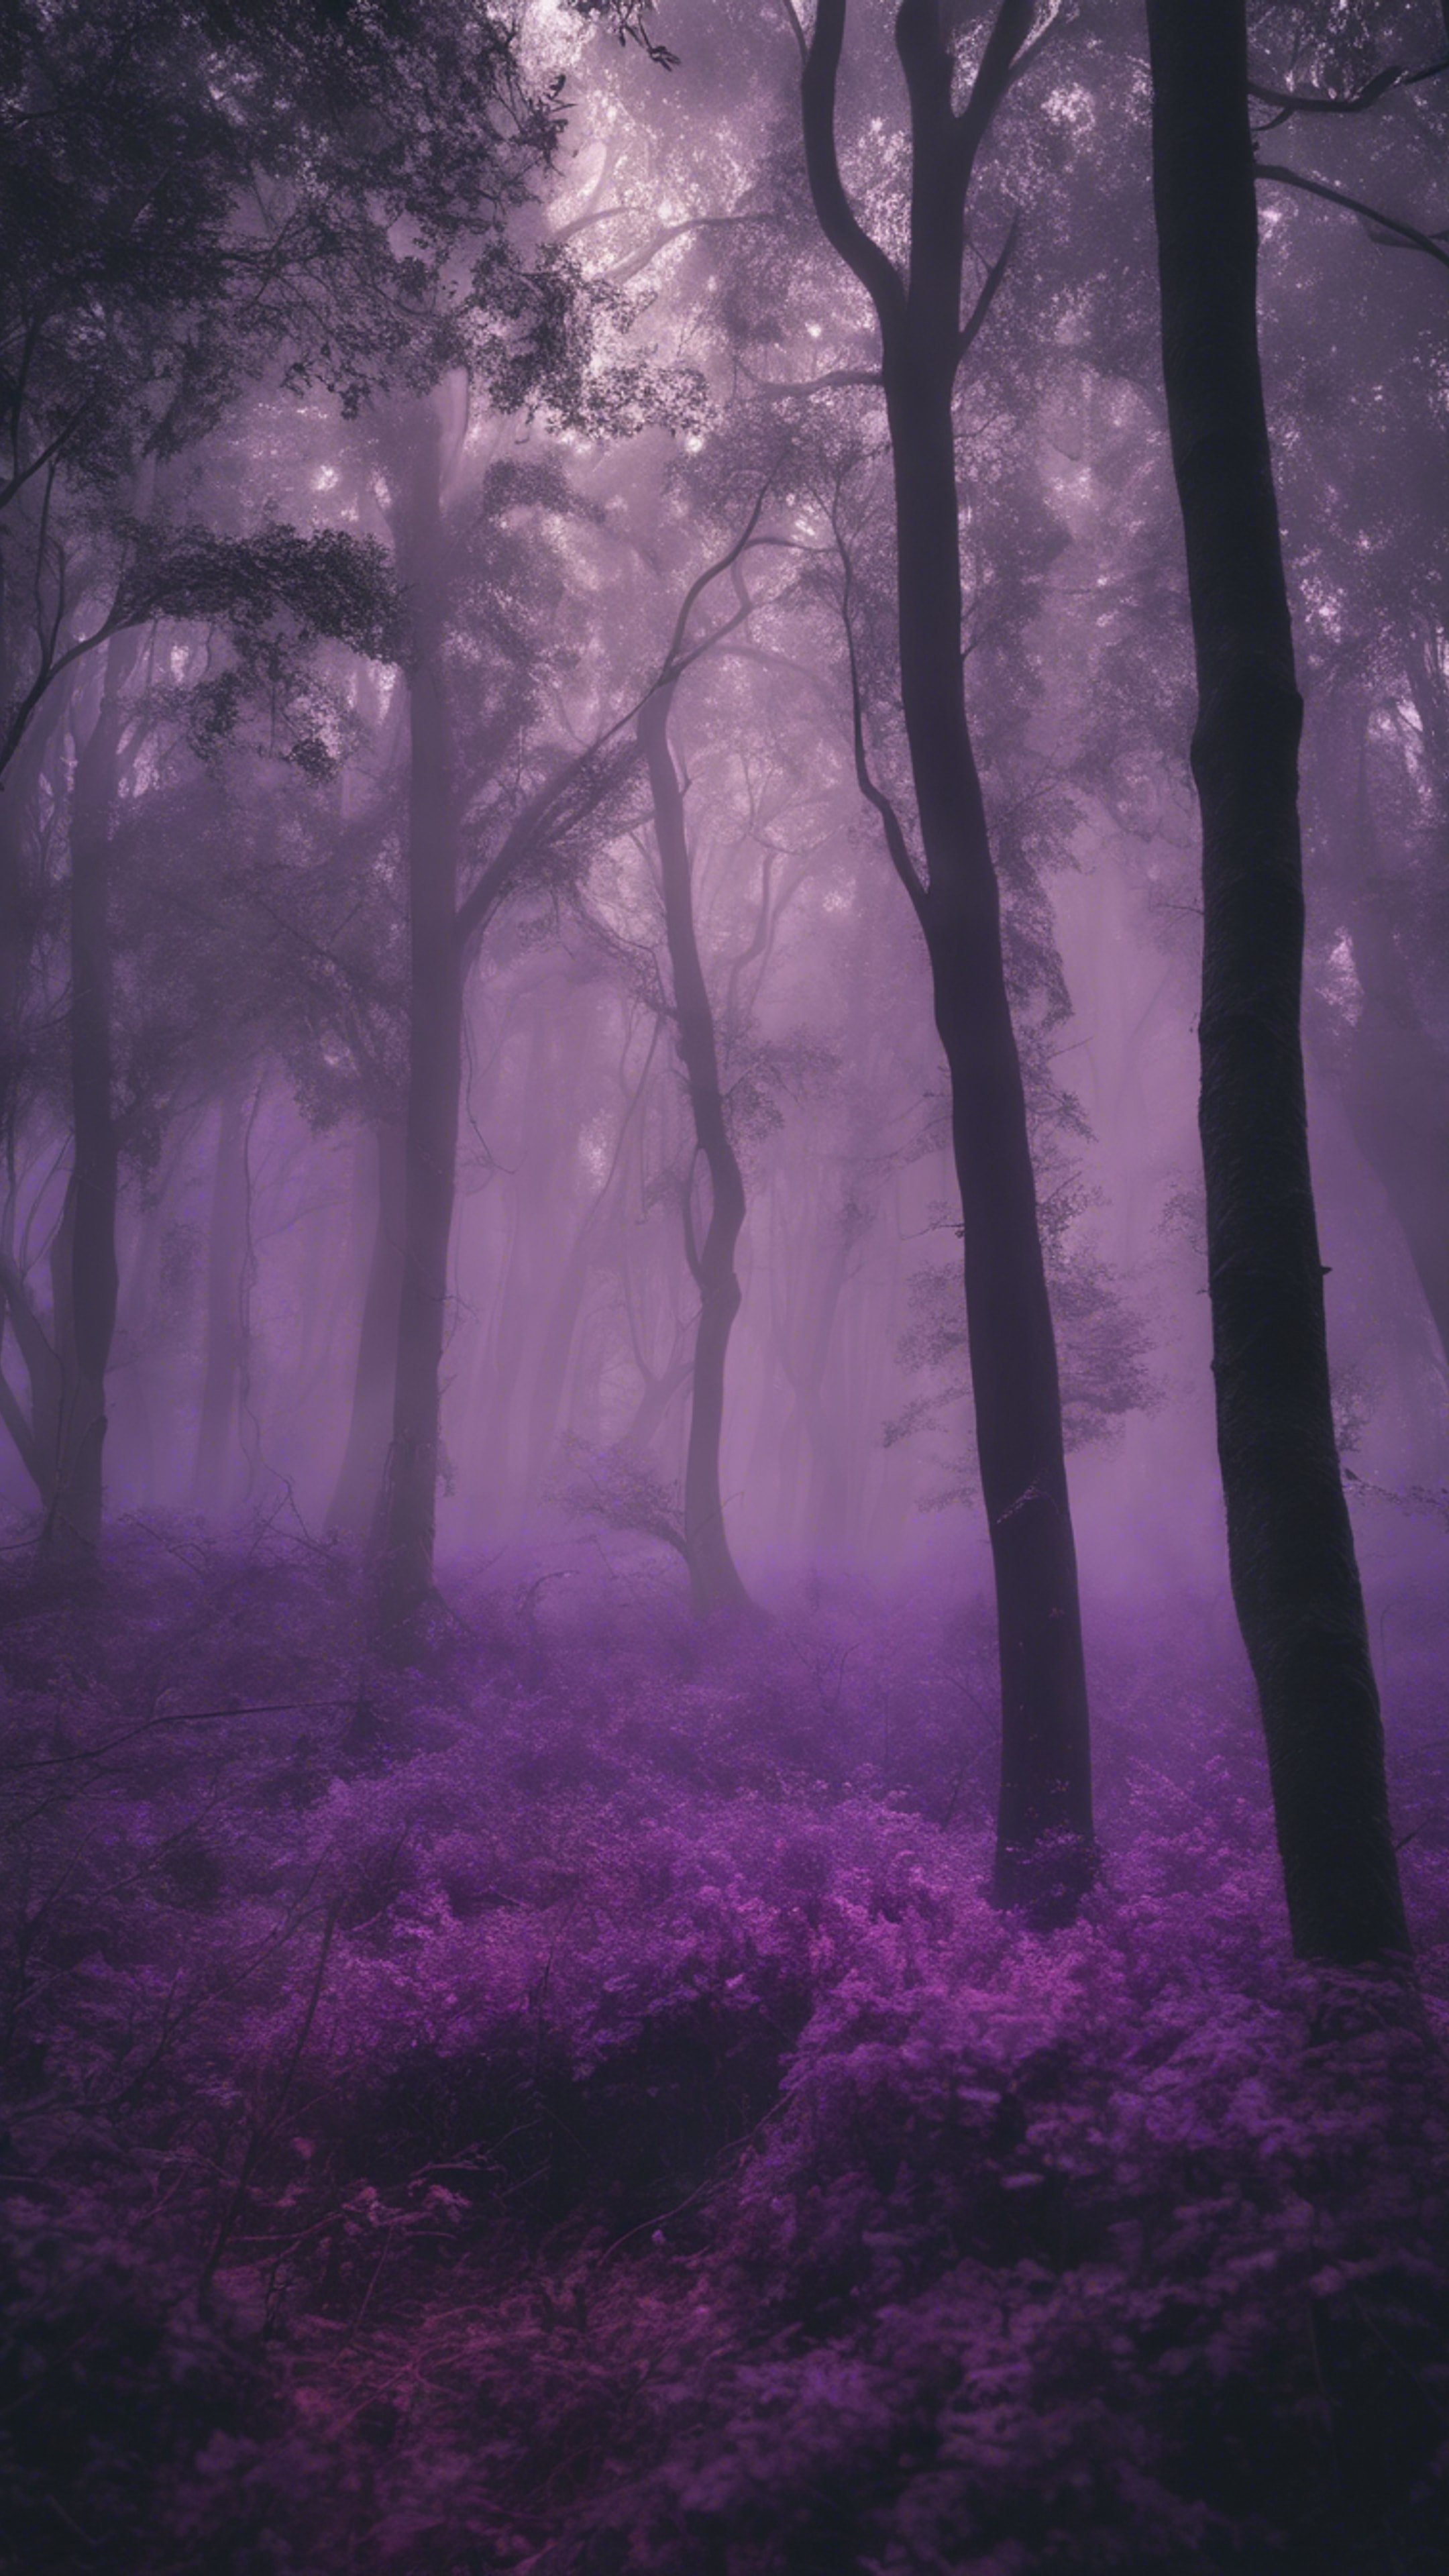 An eerie forest shrouded in a cool dark purple mist. Wallpaper[6dd2a5a50e3c4ca29835]